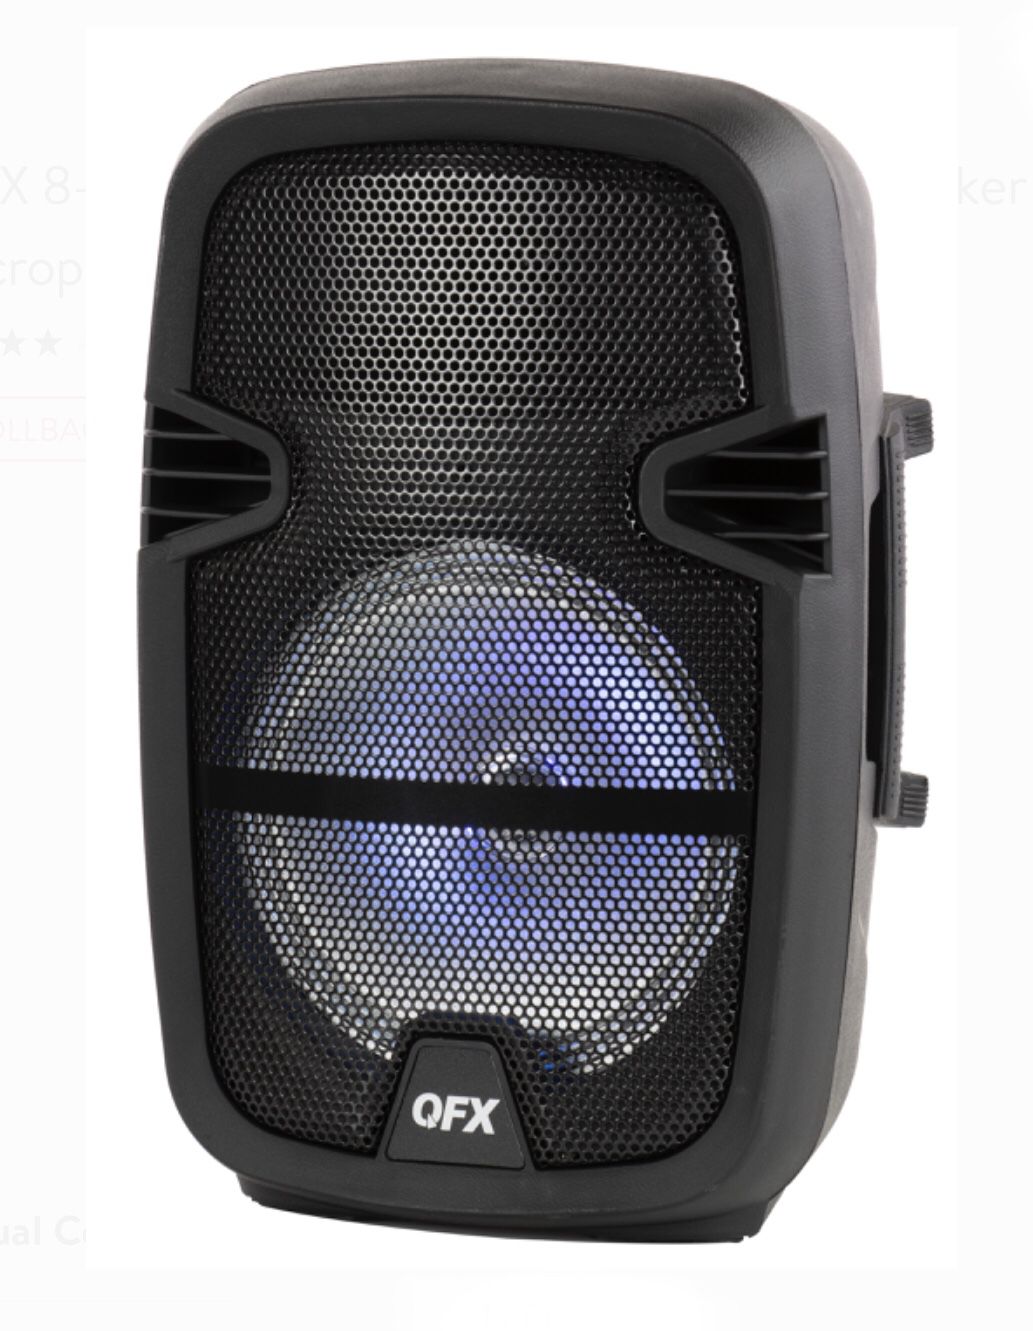 QFX 8-in Portable Bluetooth speaker